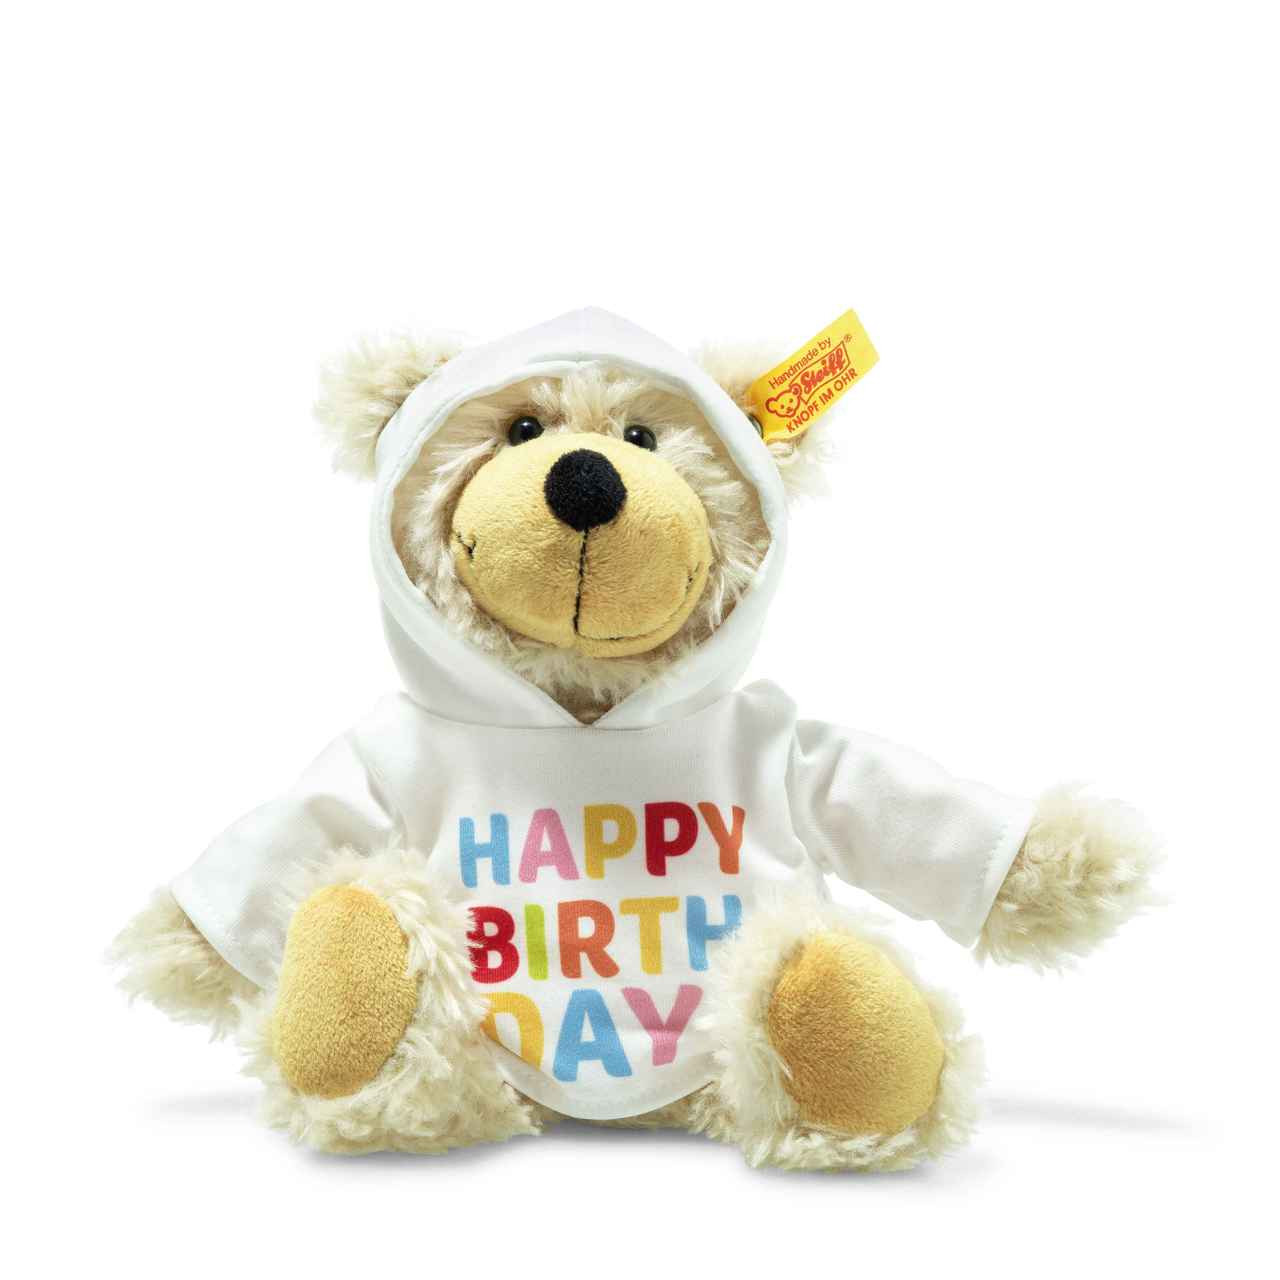 Oshko Happy Birthday Teddy Bear Stuffed Animal Plush Red Shirt Style # 5000w for sale online 